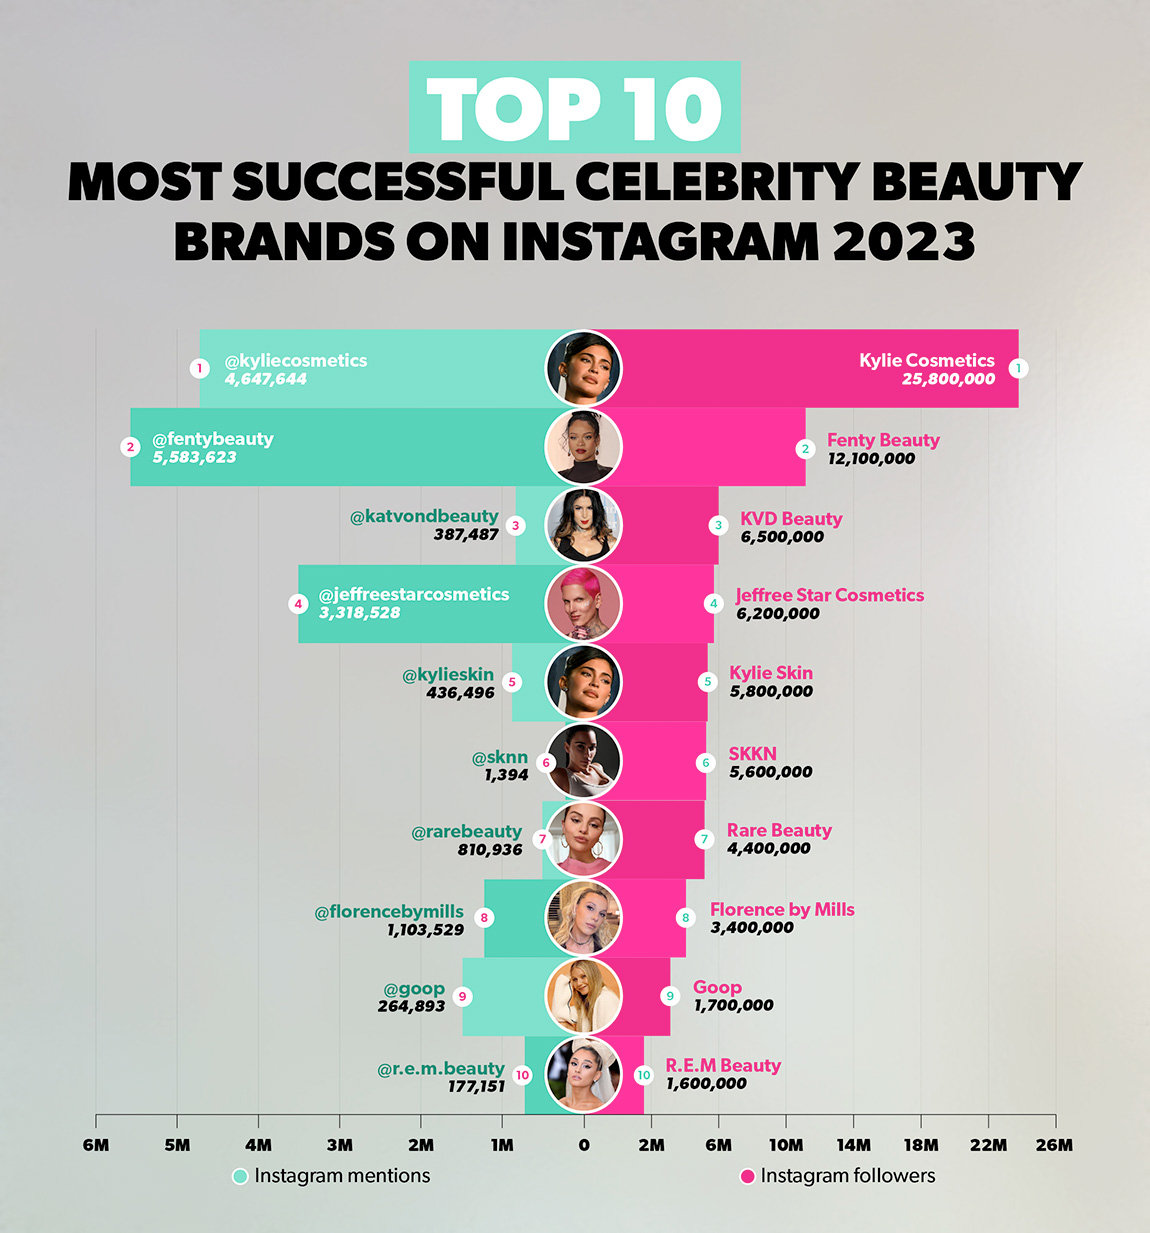 Top 10 celebrity beauty brands on Instagram